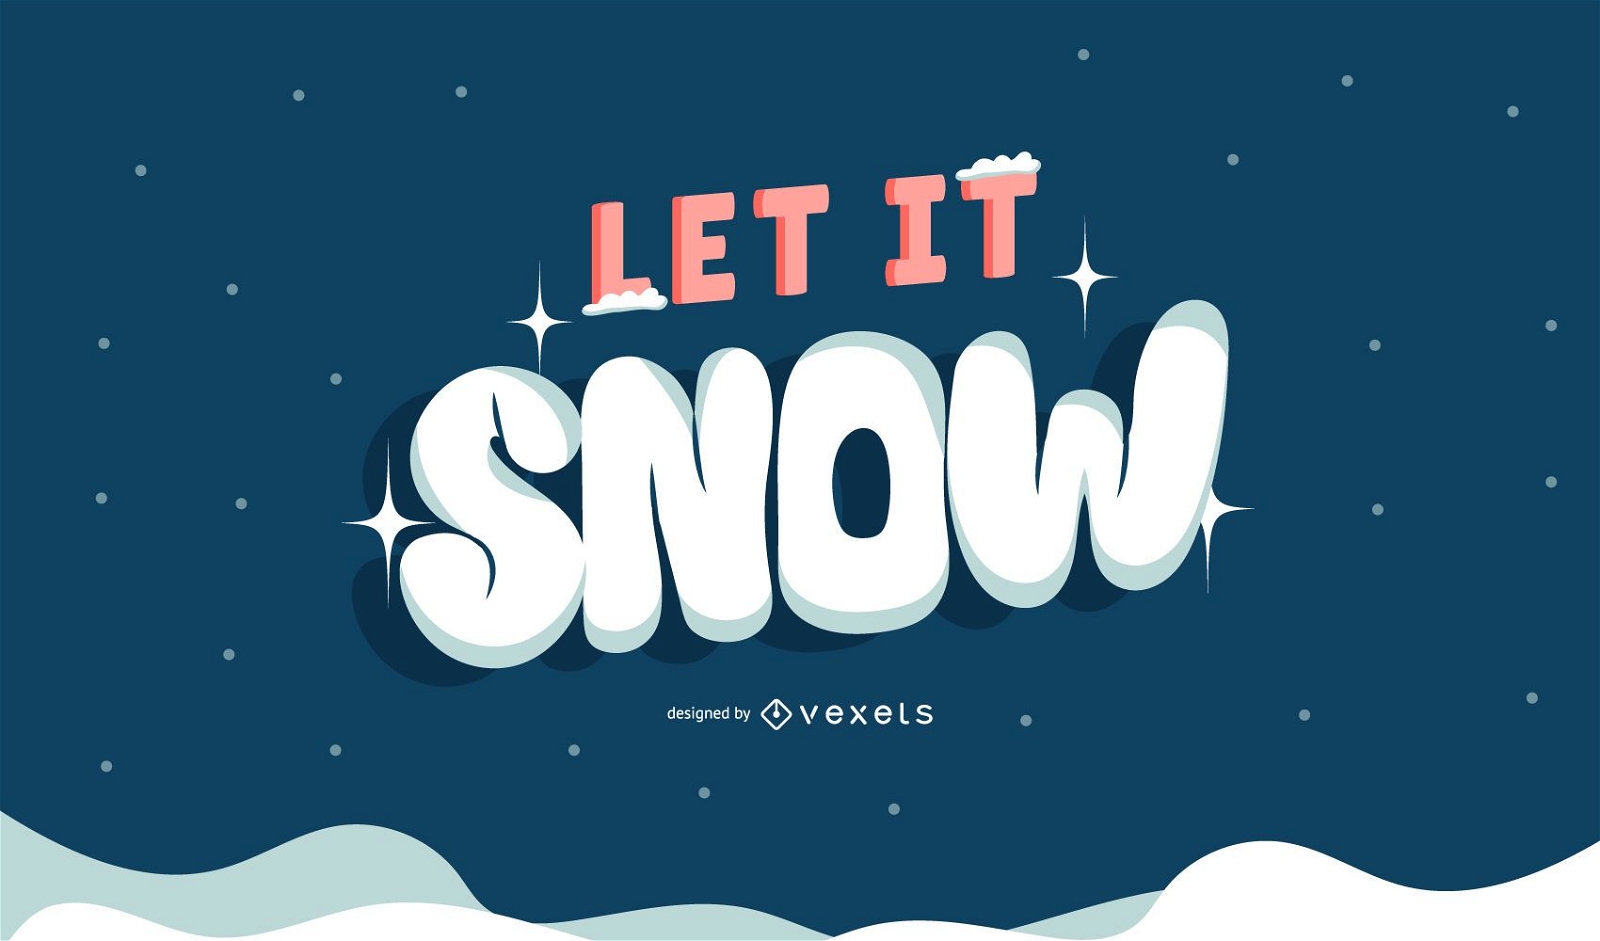 Deixe nevar design de letras